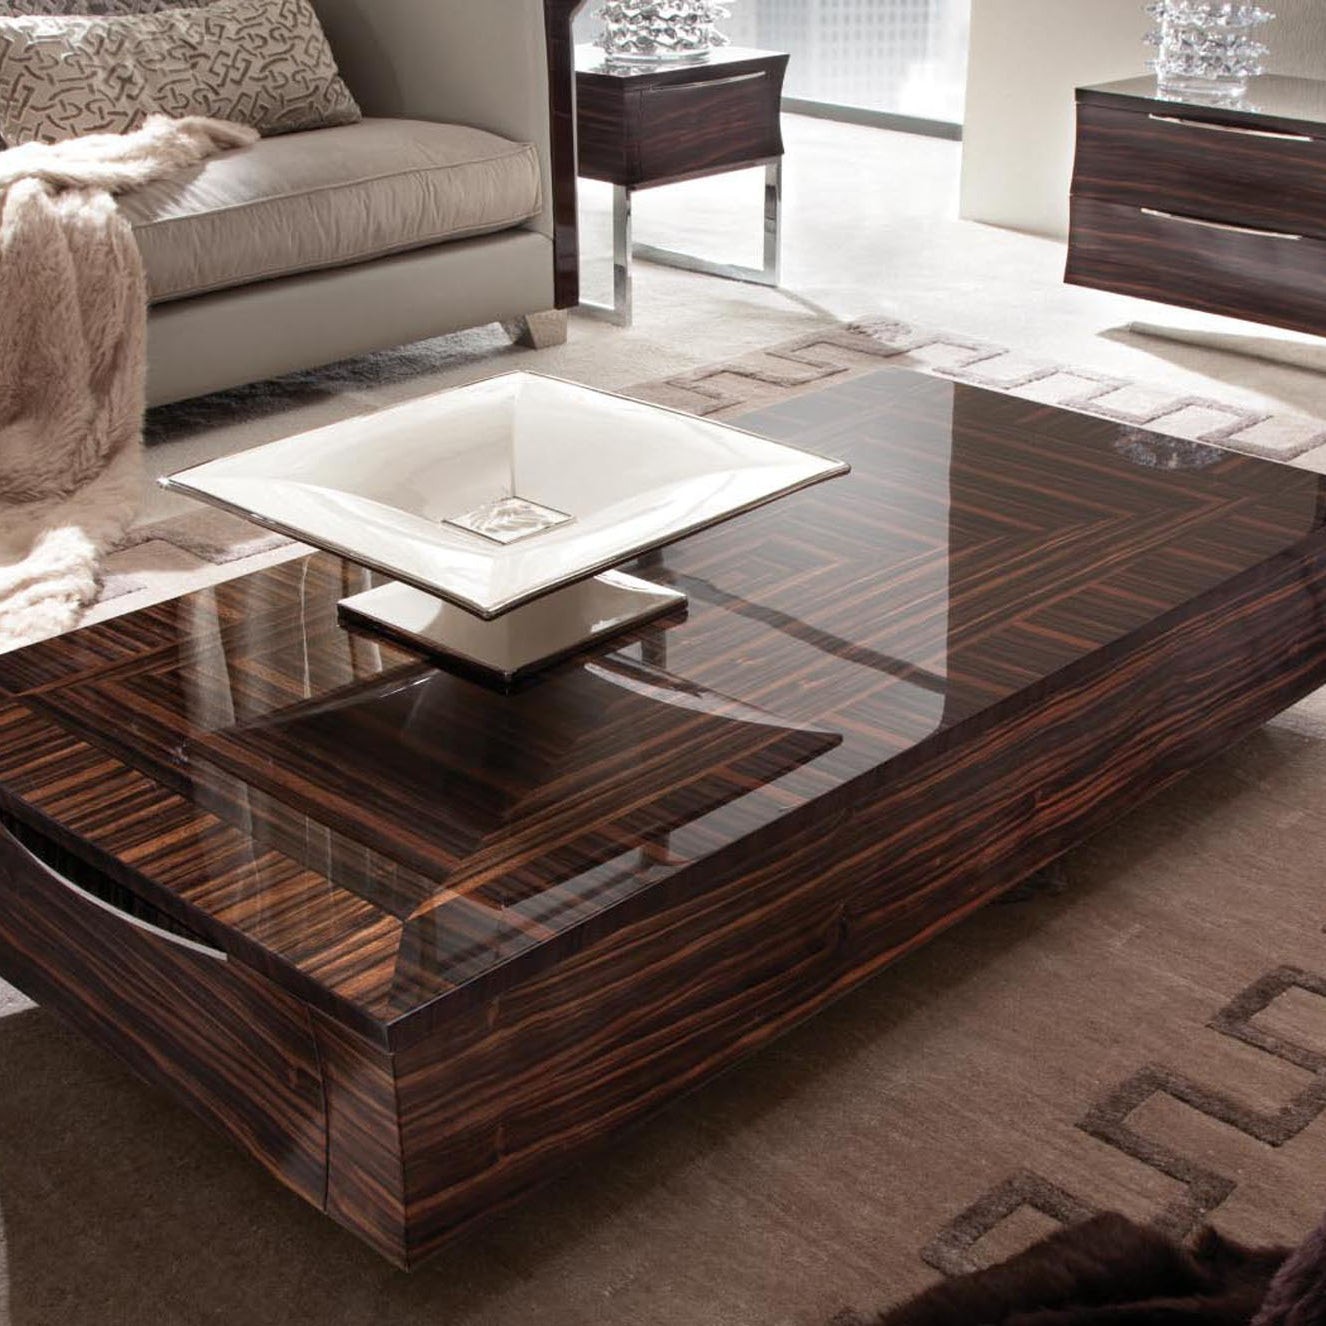 DAY DREAM rectangular coffee table2